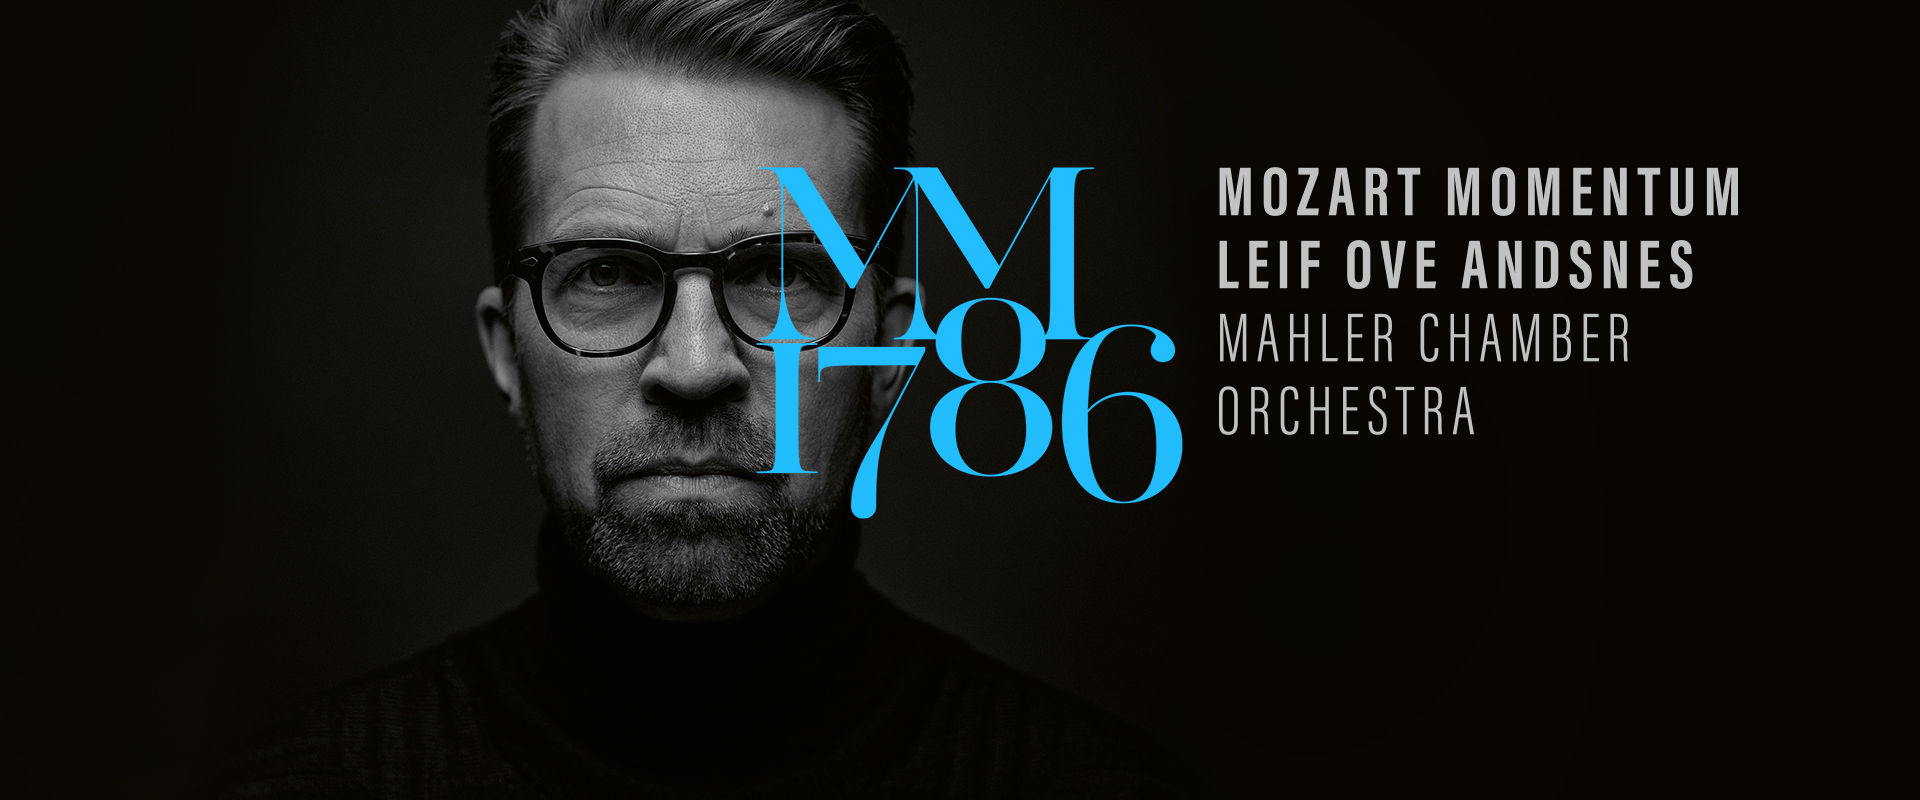 Leif Ove Andsnes Mozart Momentum Cover image